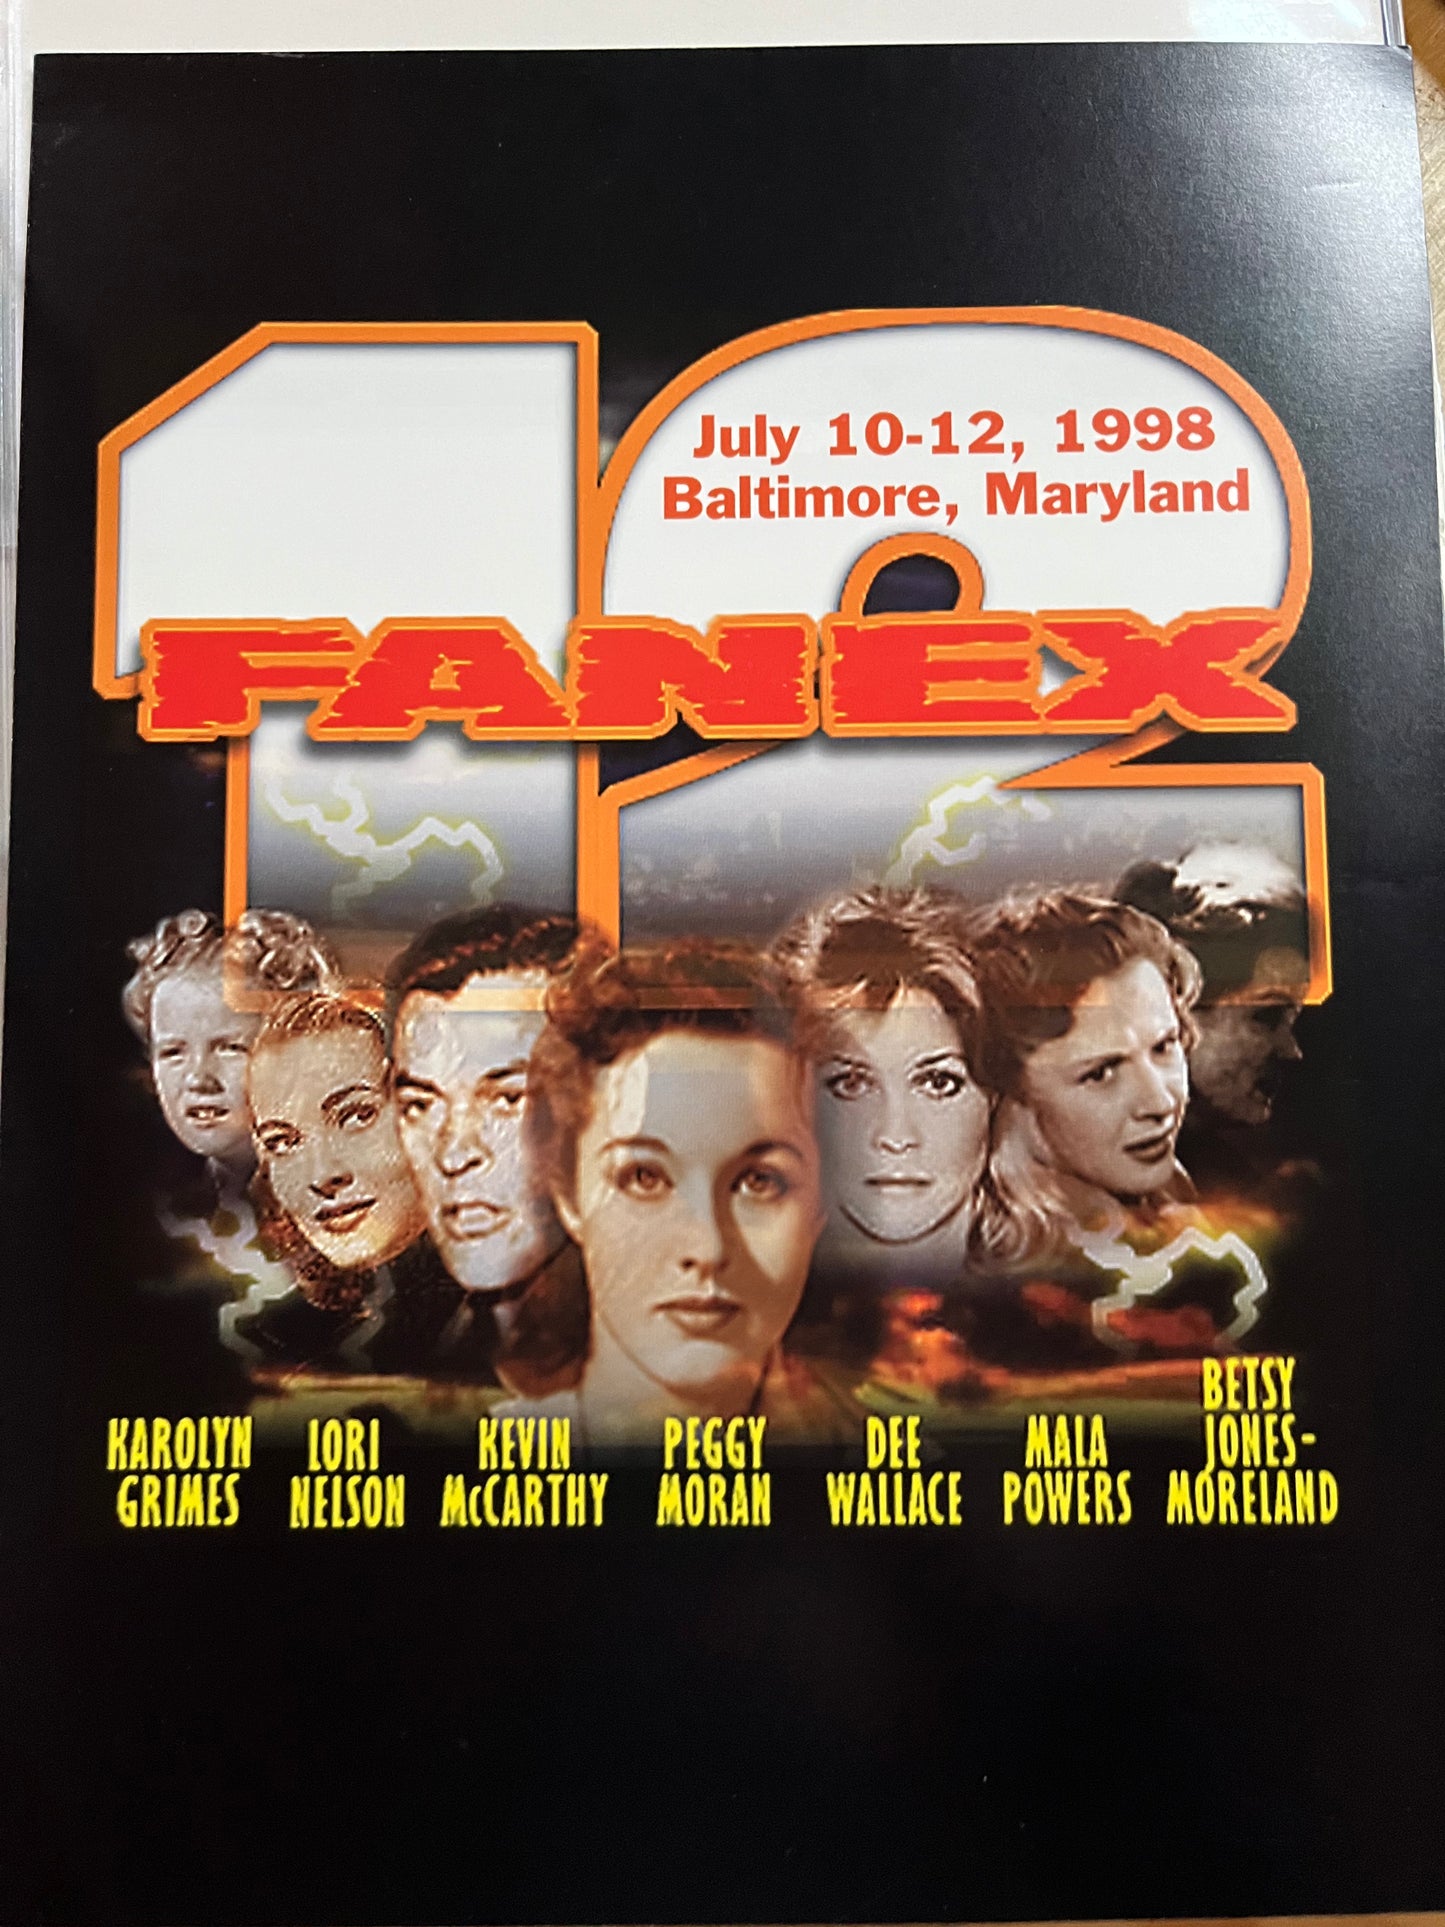 FANEX 12 Program, Kevin McCarthy, Male Powers, nine autographs!!